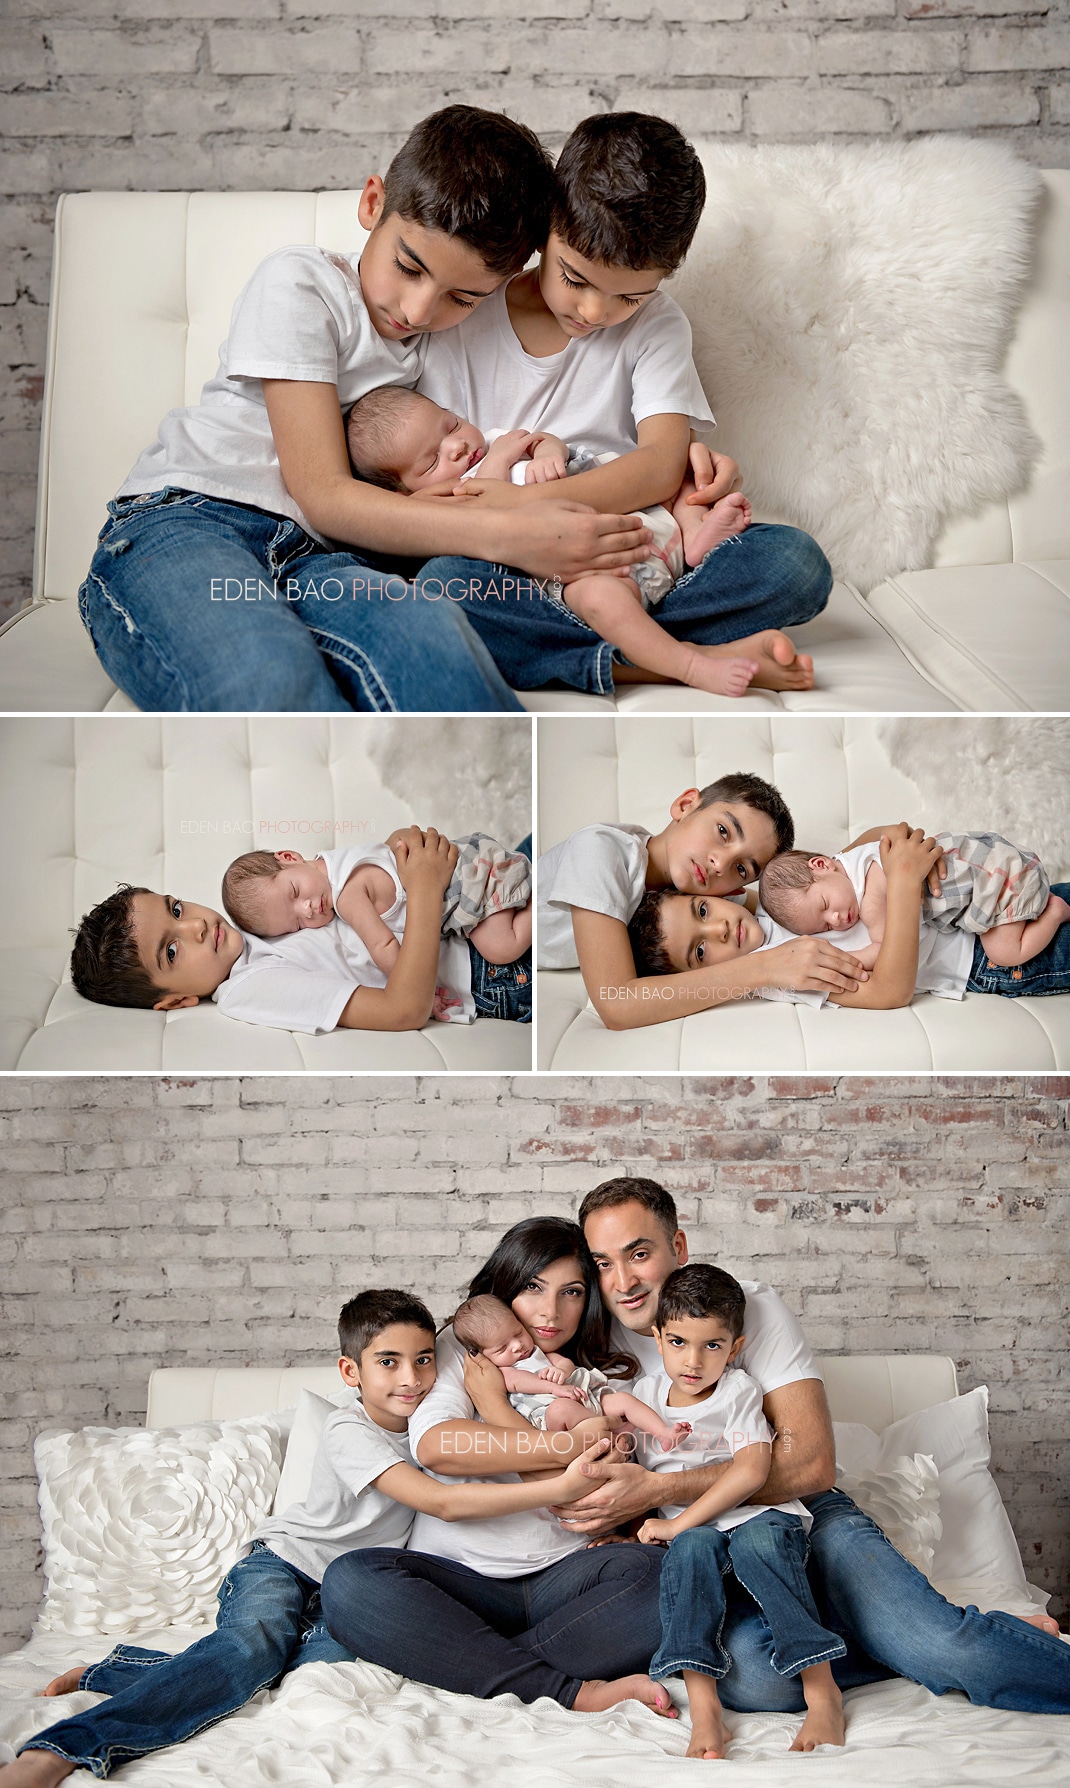 Vancouver BC Newborn Photographer Eden Bao | Aarya Indian sibling family baby cream leather futon brick walls